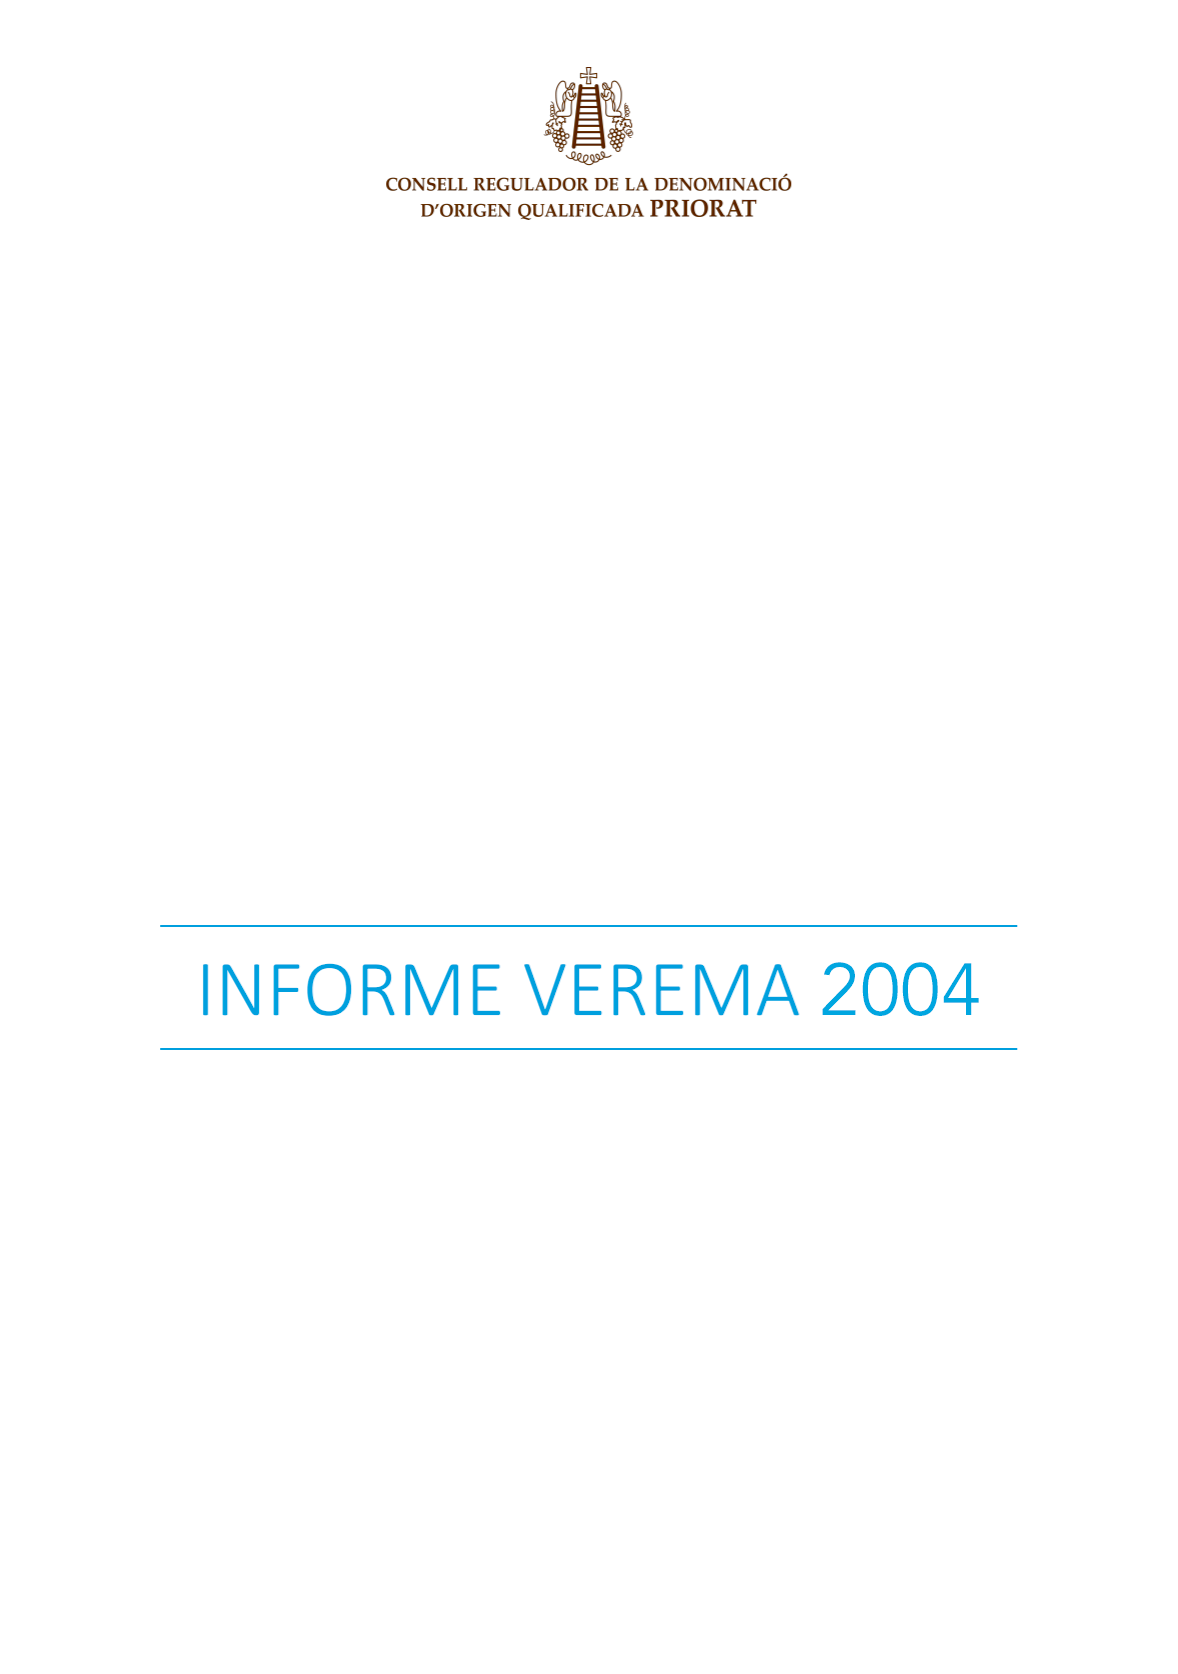 Informe de verema 2004